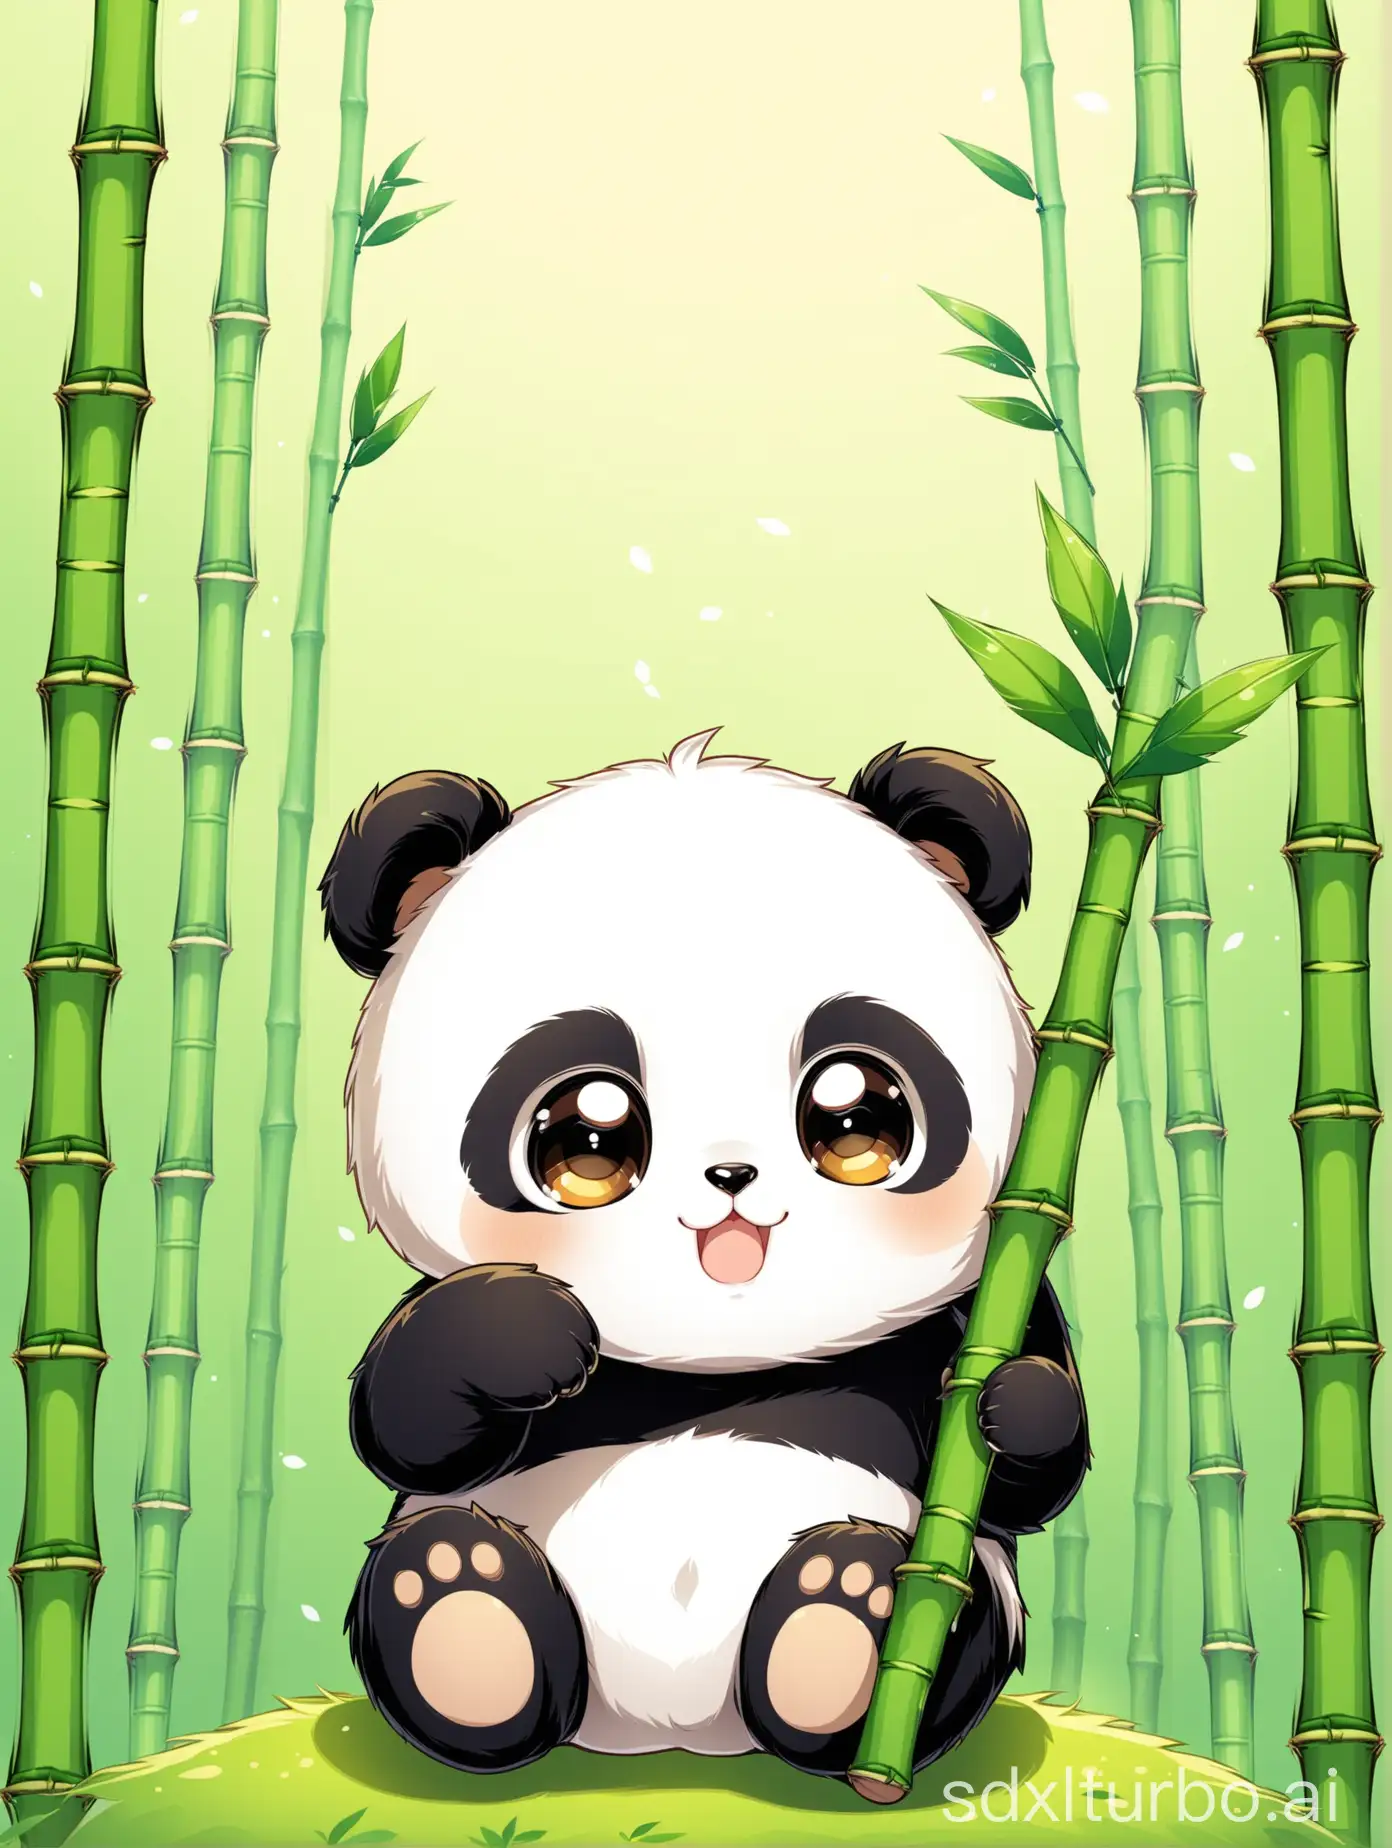 Cute big eyes sitting panda holding bamboo